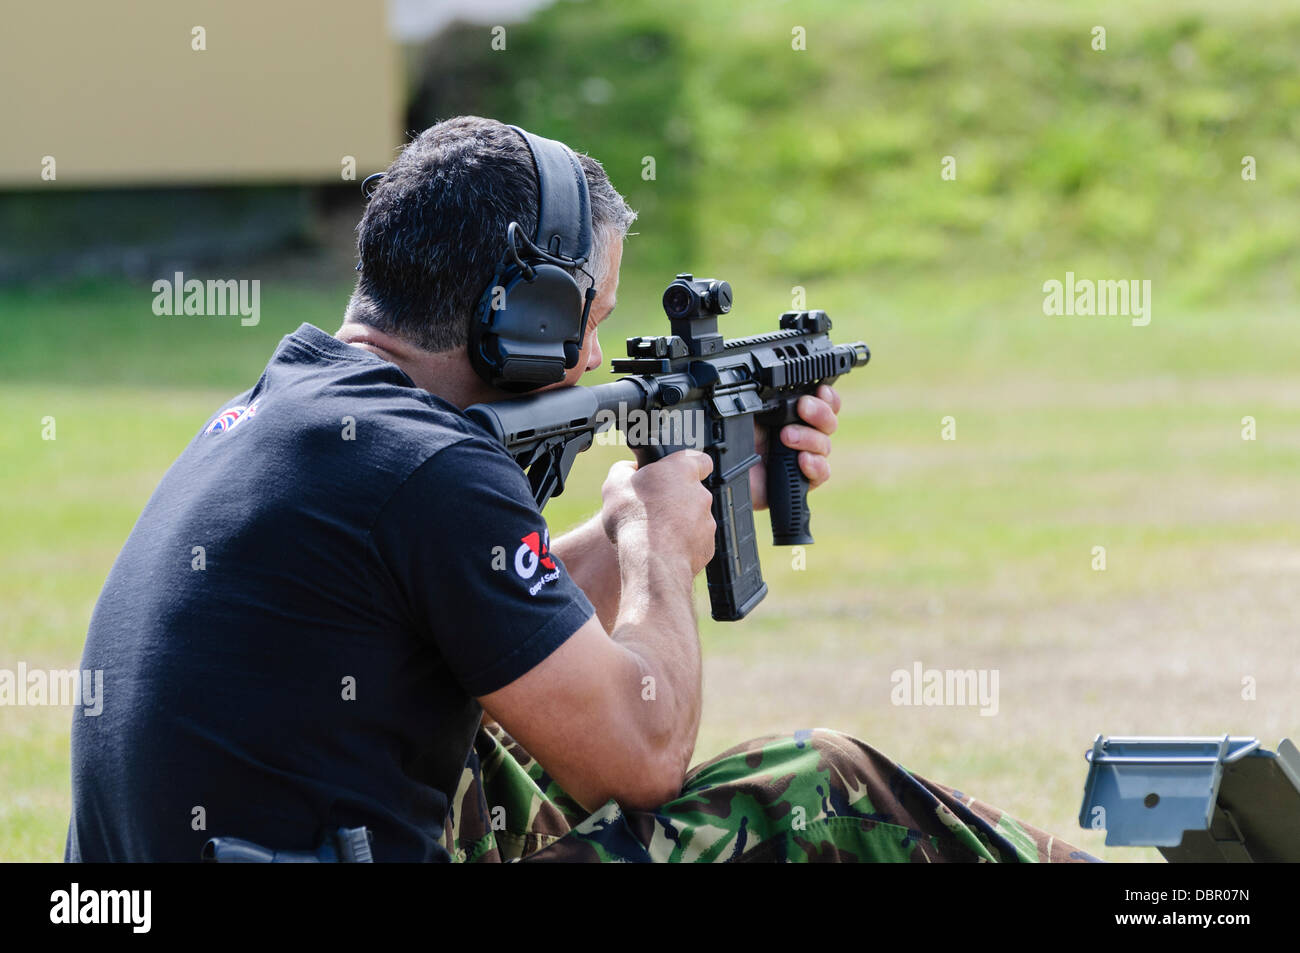 Ballykinlar, Northern Ireland. 2nd August 2013 - A man fires a Colt M4A1 Credit:  Stephen Barnes/Alamy Live News Stock Photo